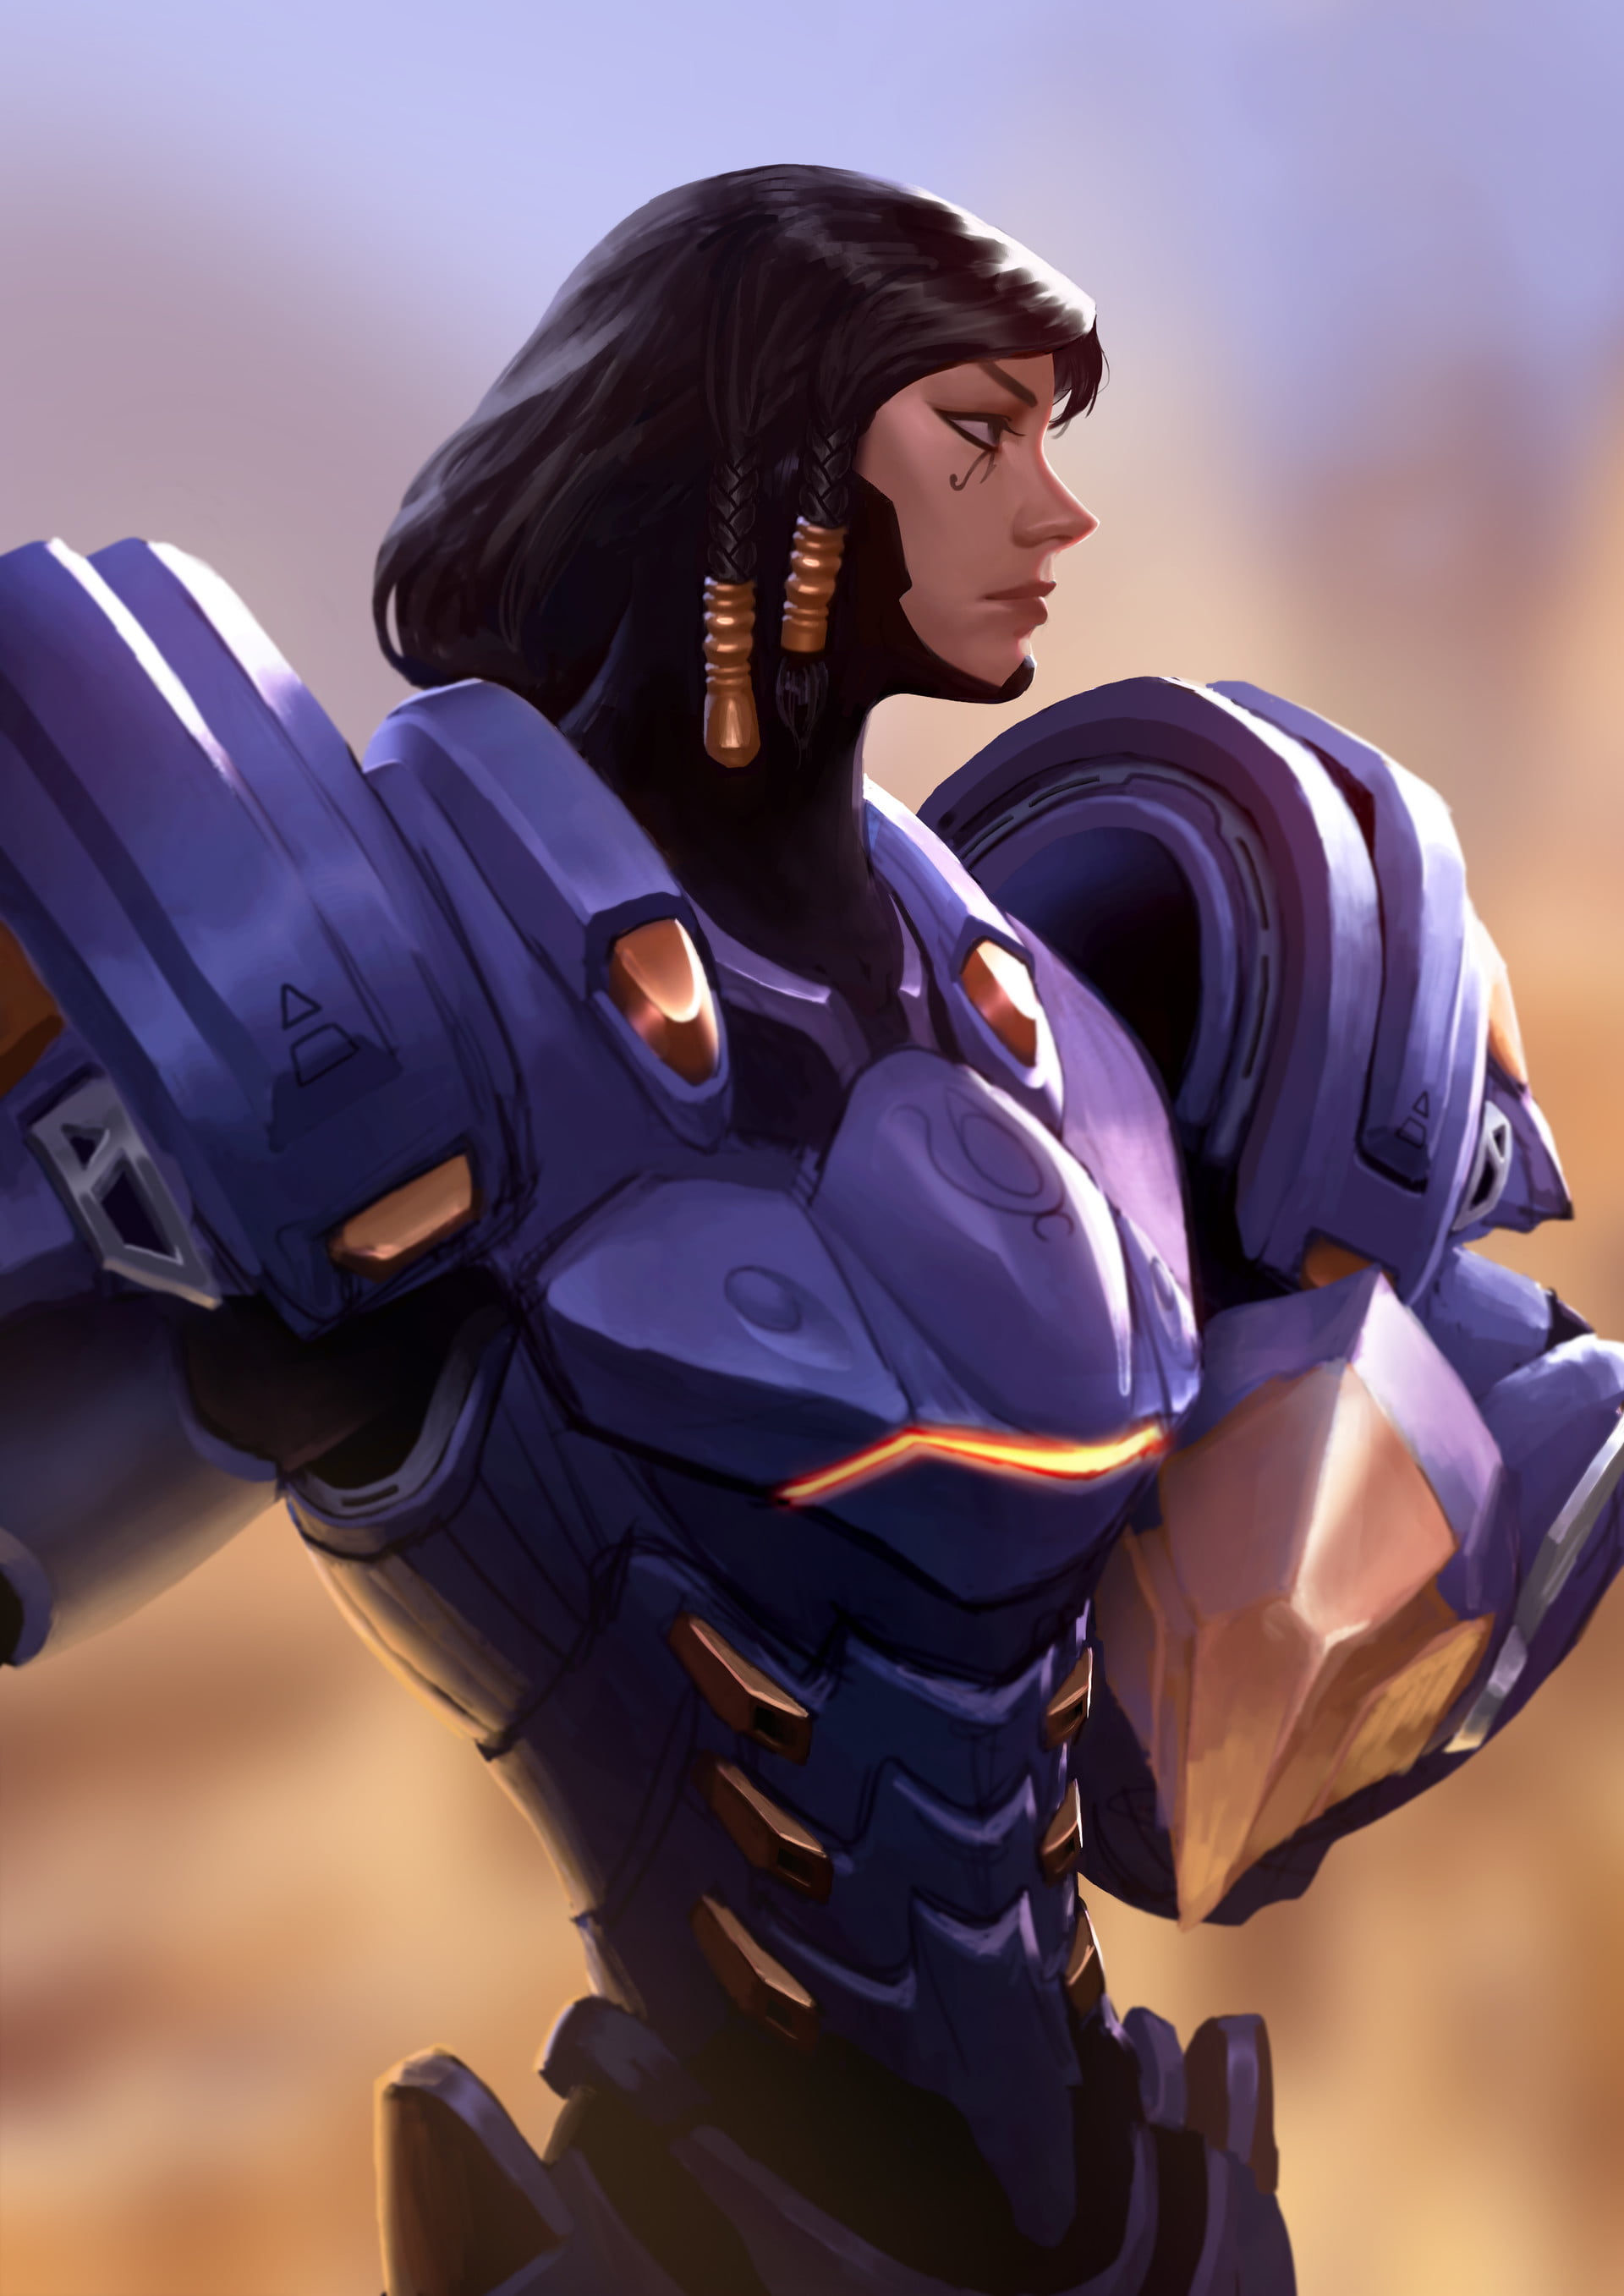 sci-fi armor girl by N7U2E on DeviantArt